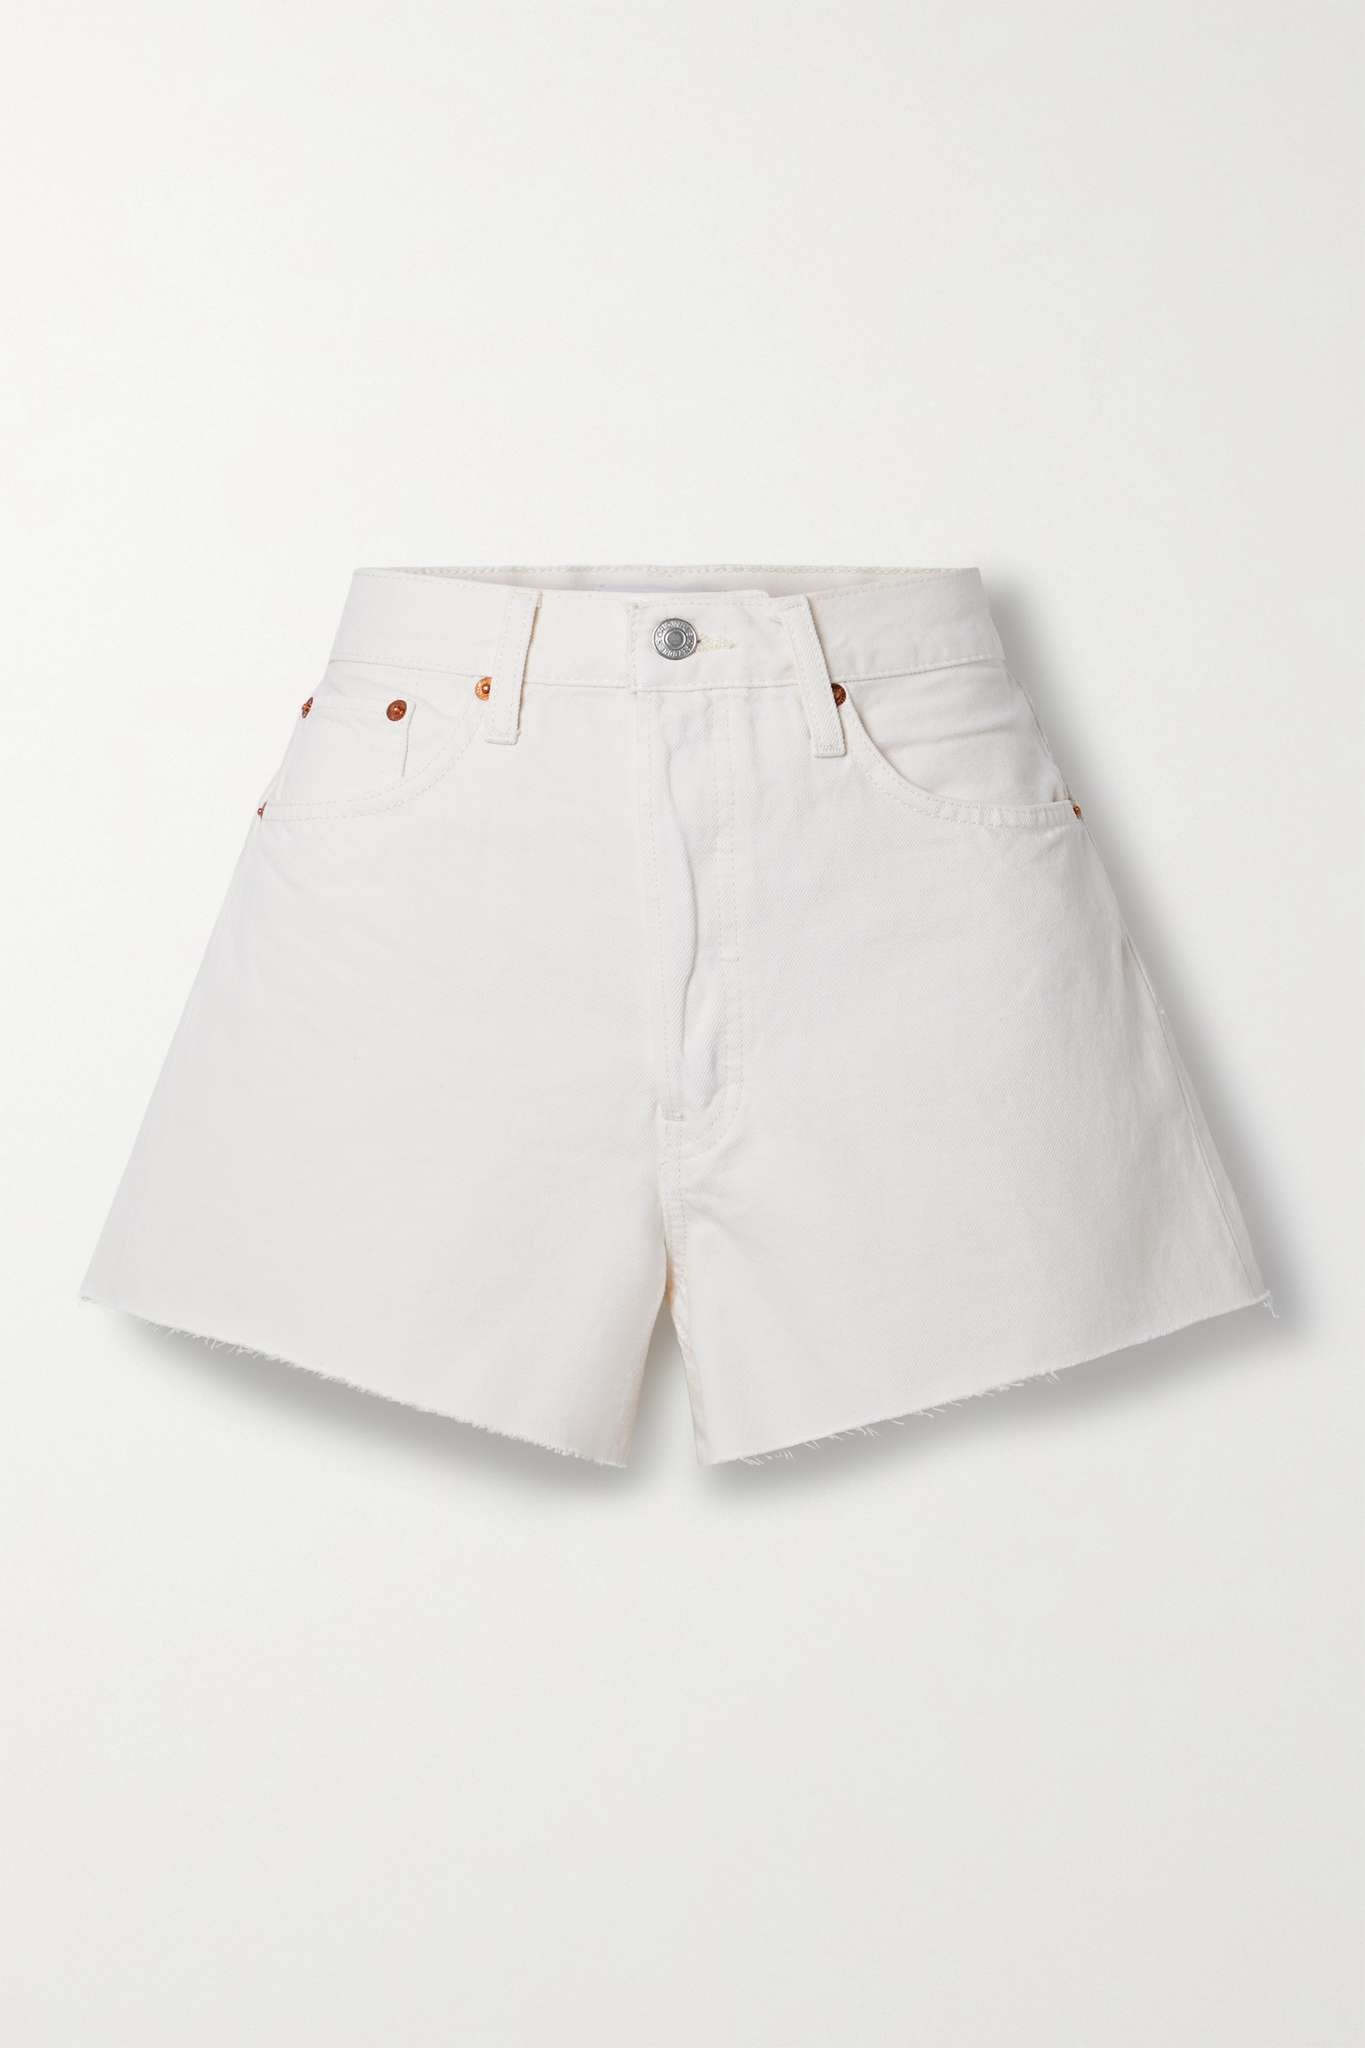 90s frayed denim shorts - 1